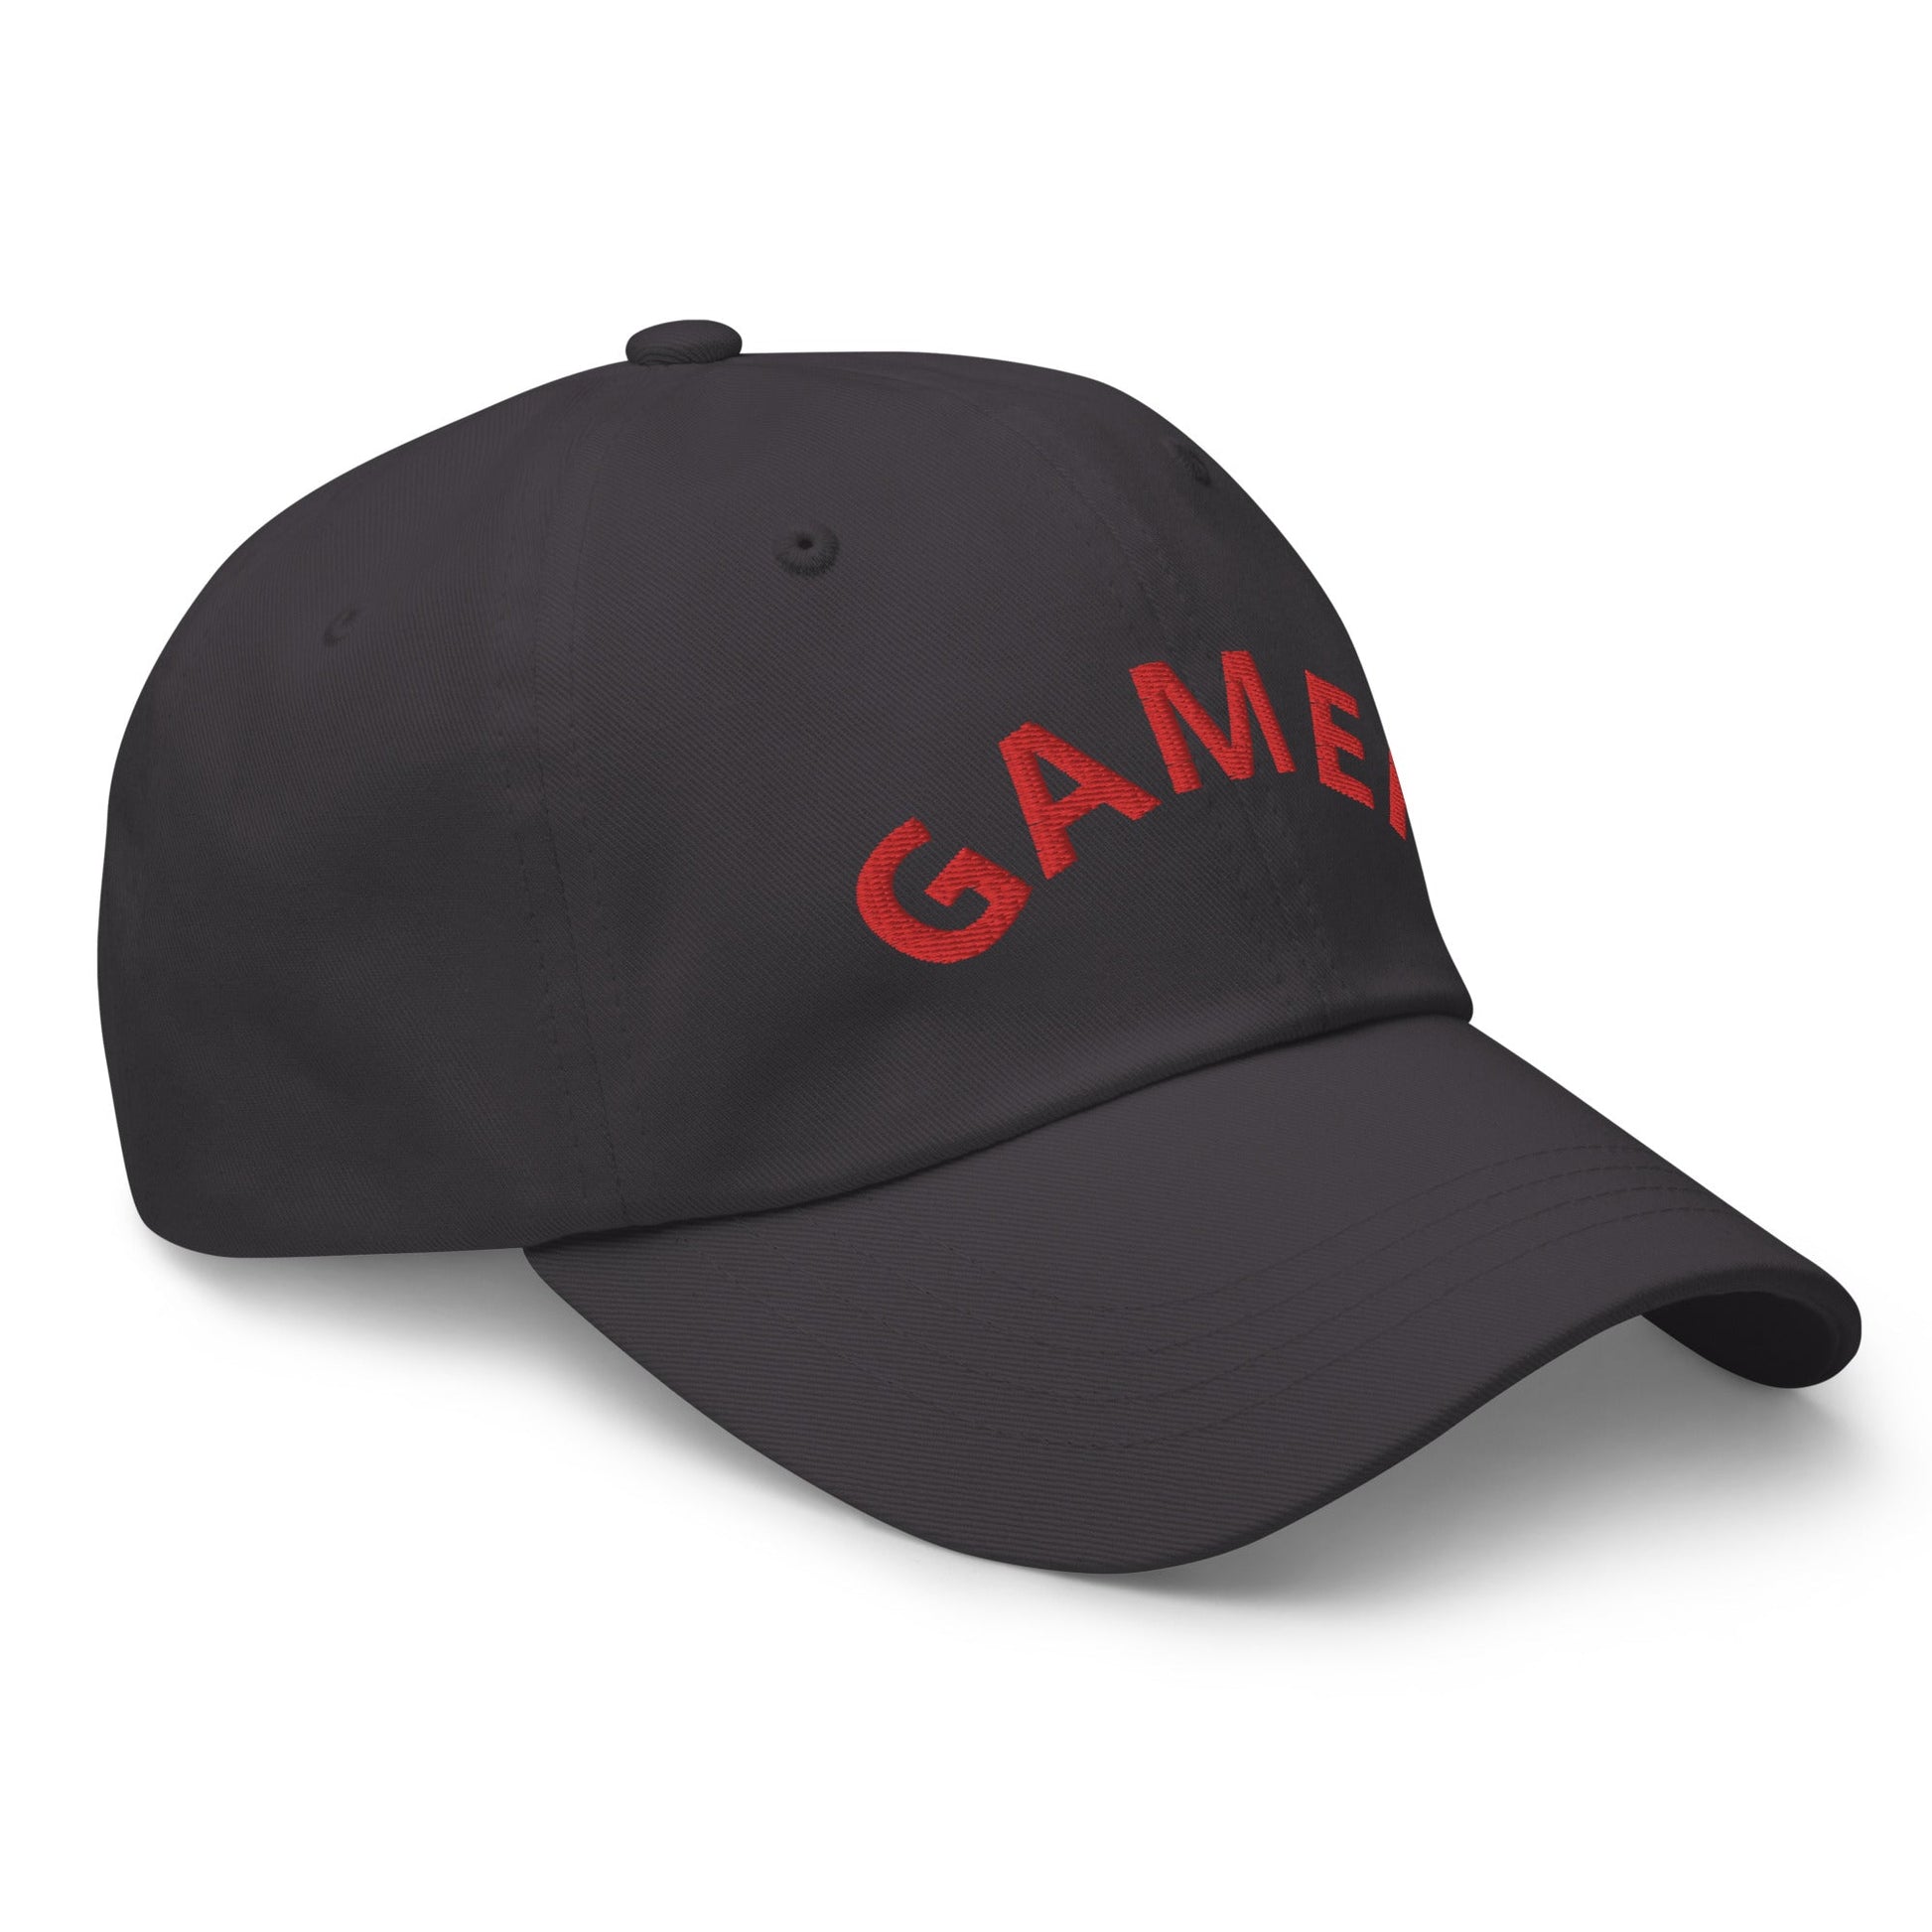 Red GAMER | Dad hat